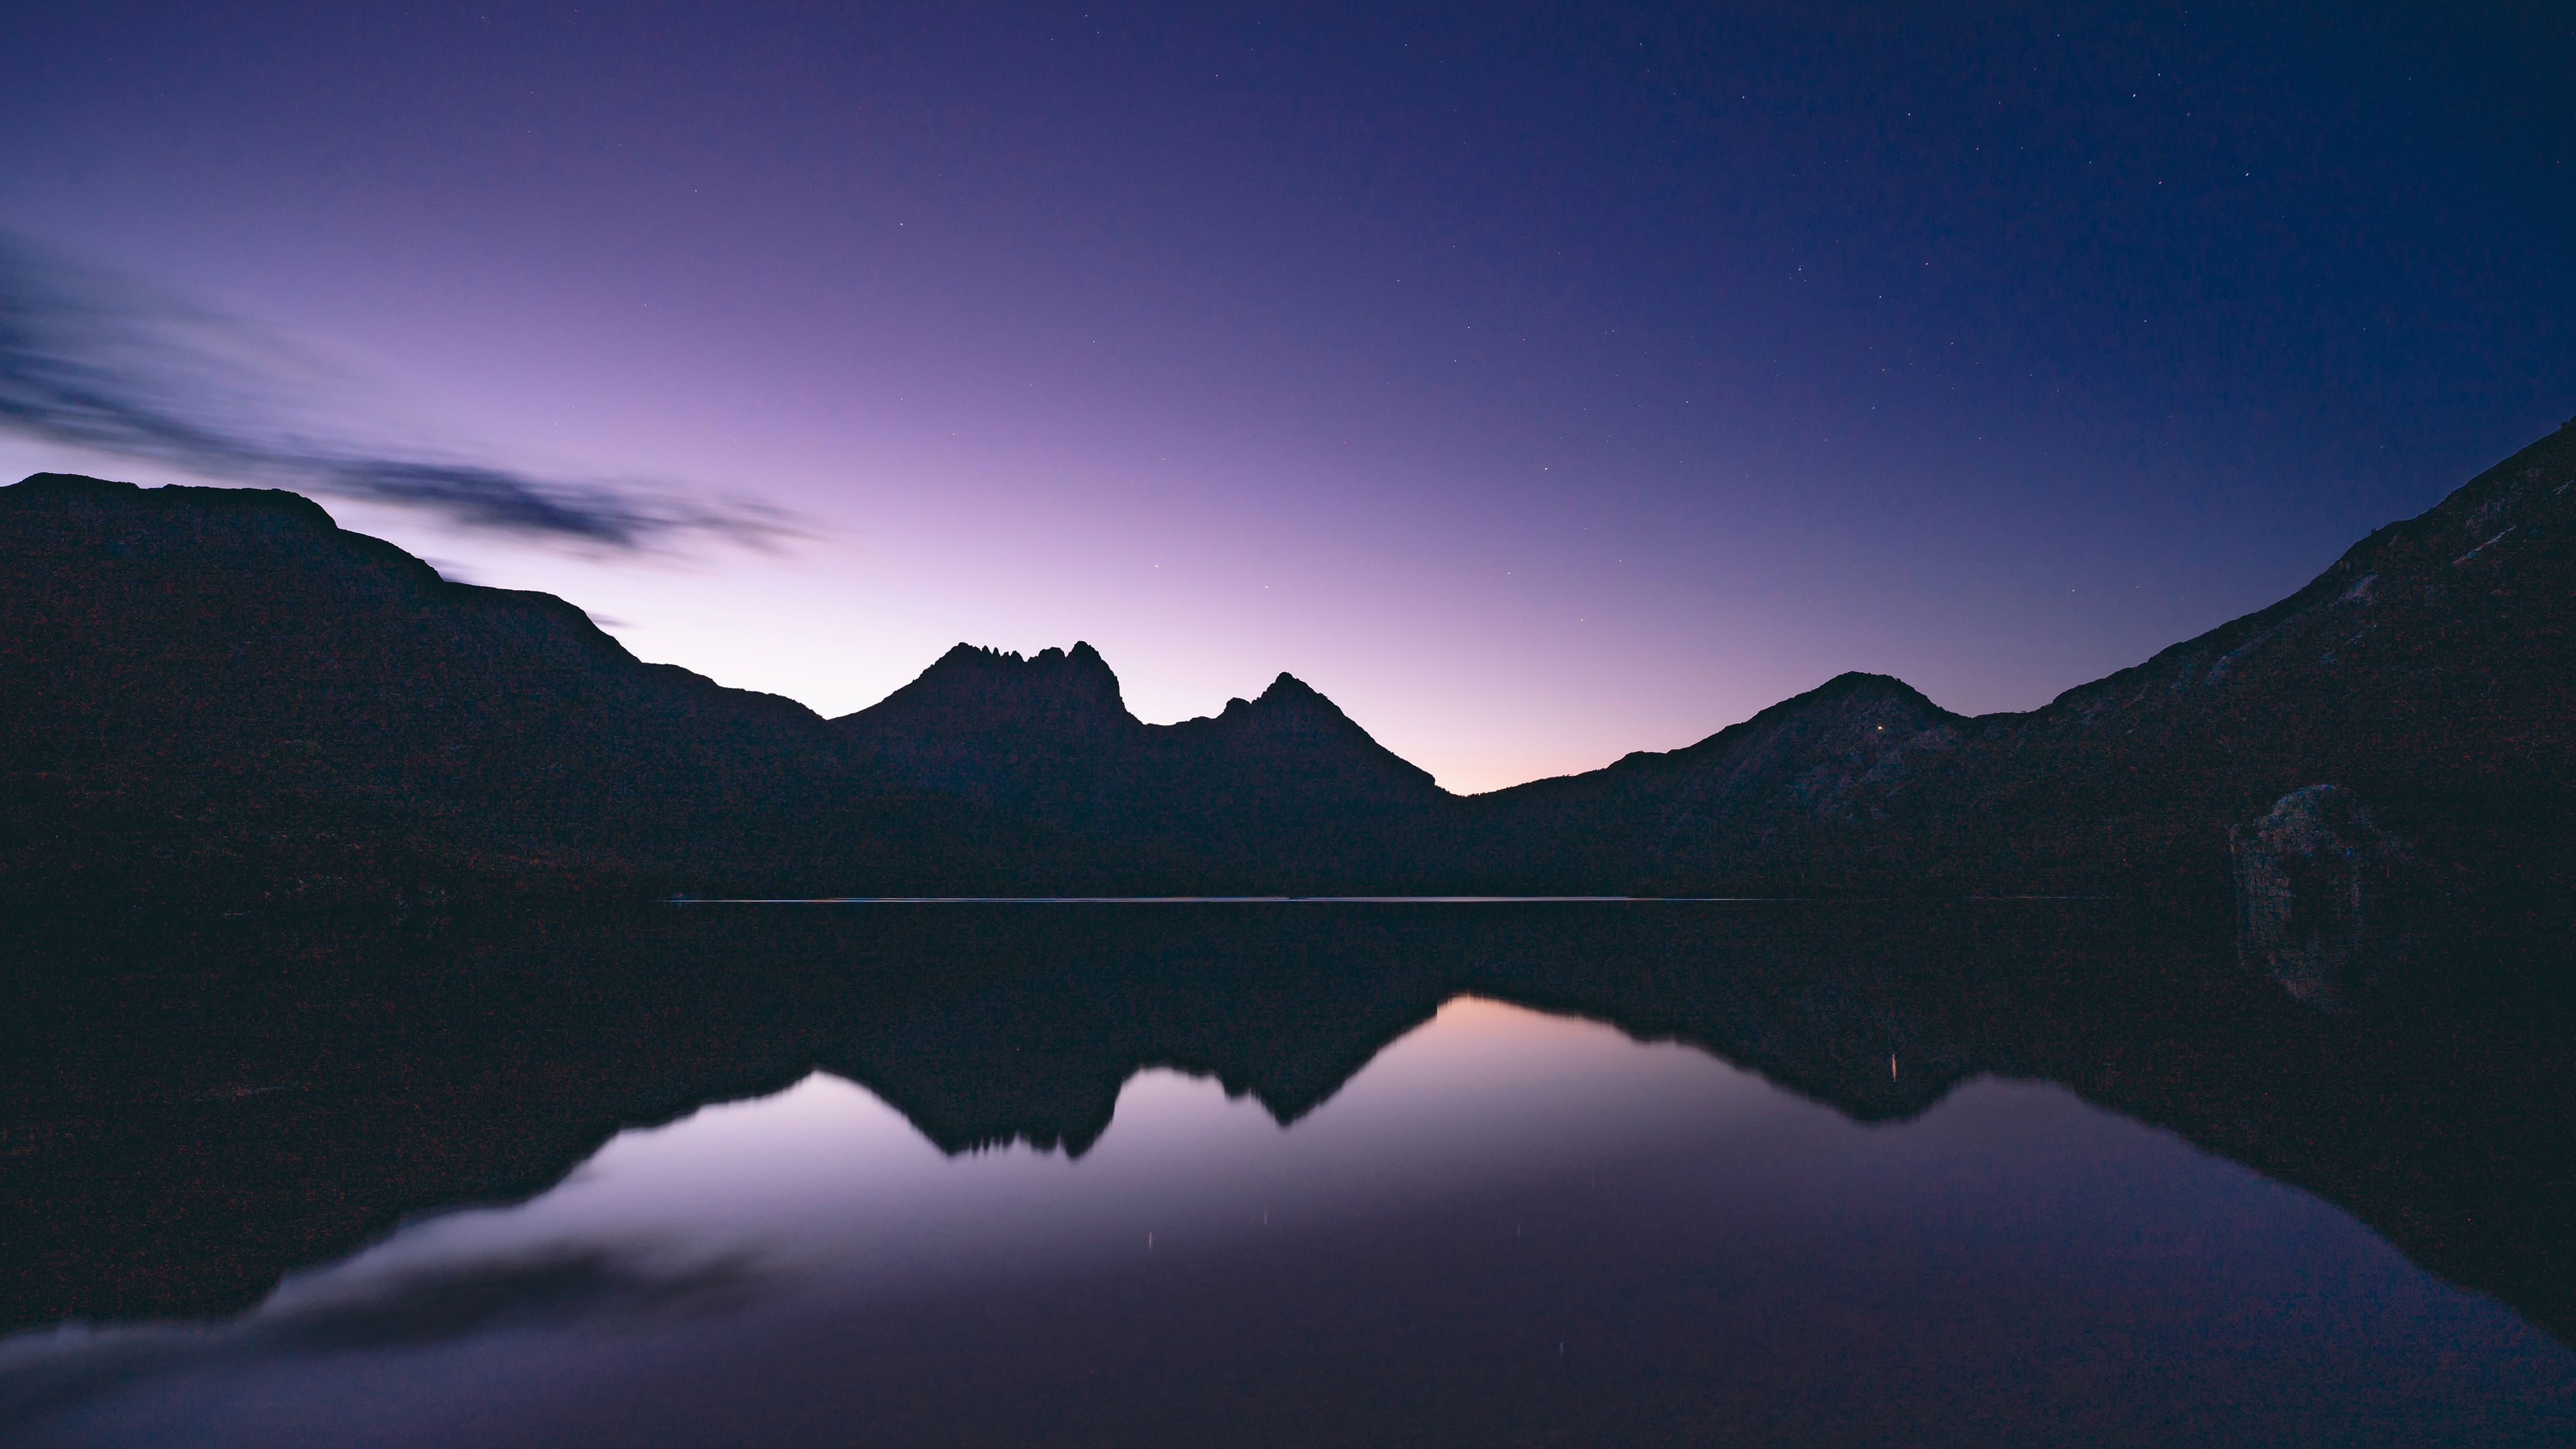 Cradle Mountain, Australia, Silhouette, Night time, Lake, Reflection, Purple Sky, Landscape, Scenery, 4k Free deskk wallpaper, Ultra HD